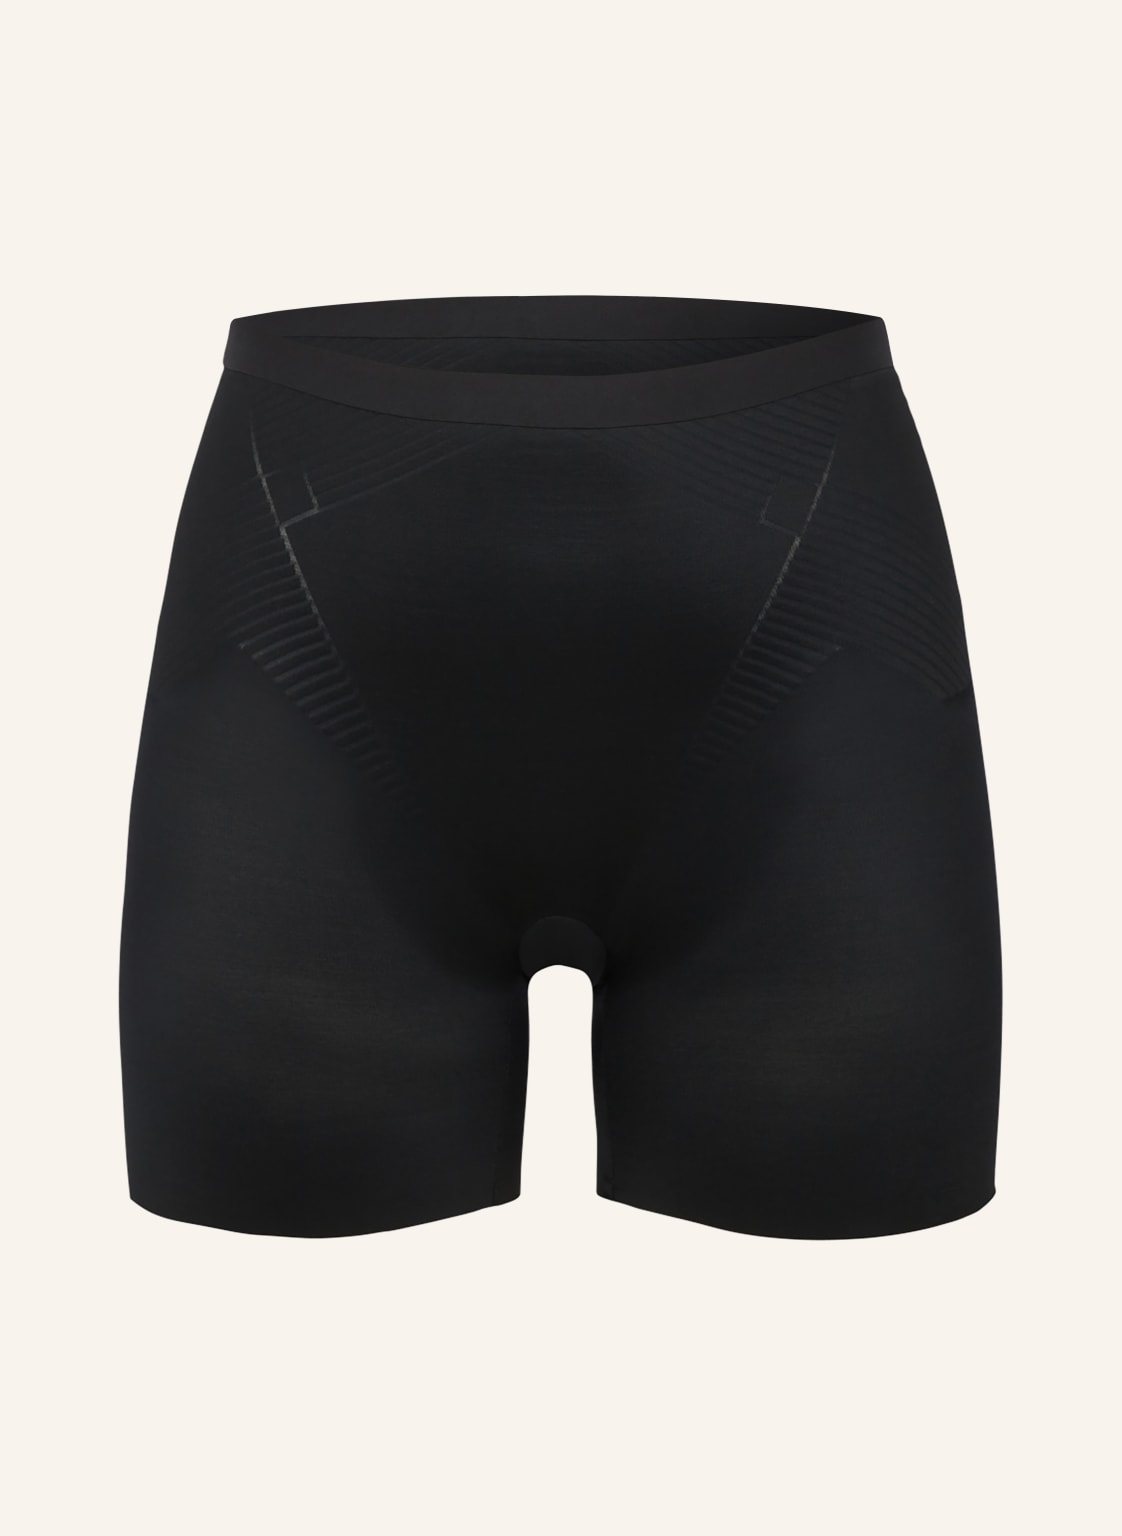 Spanx Shape-Shorts Thinstincts® 2.0 Girlshort schwarz von Spanx